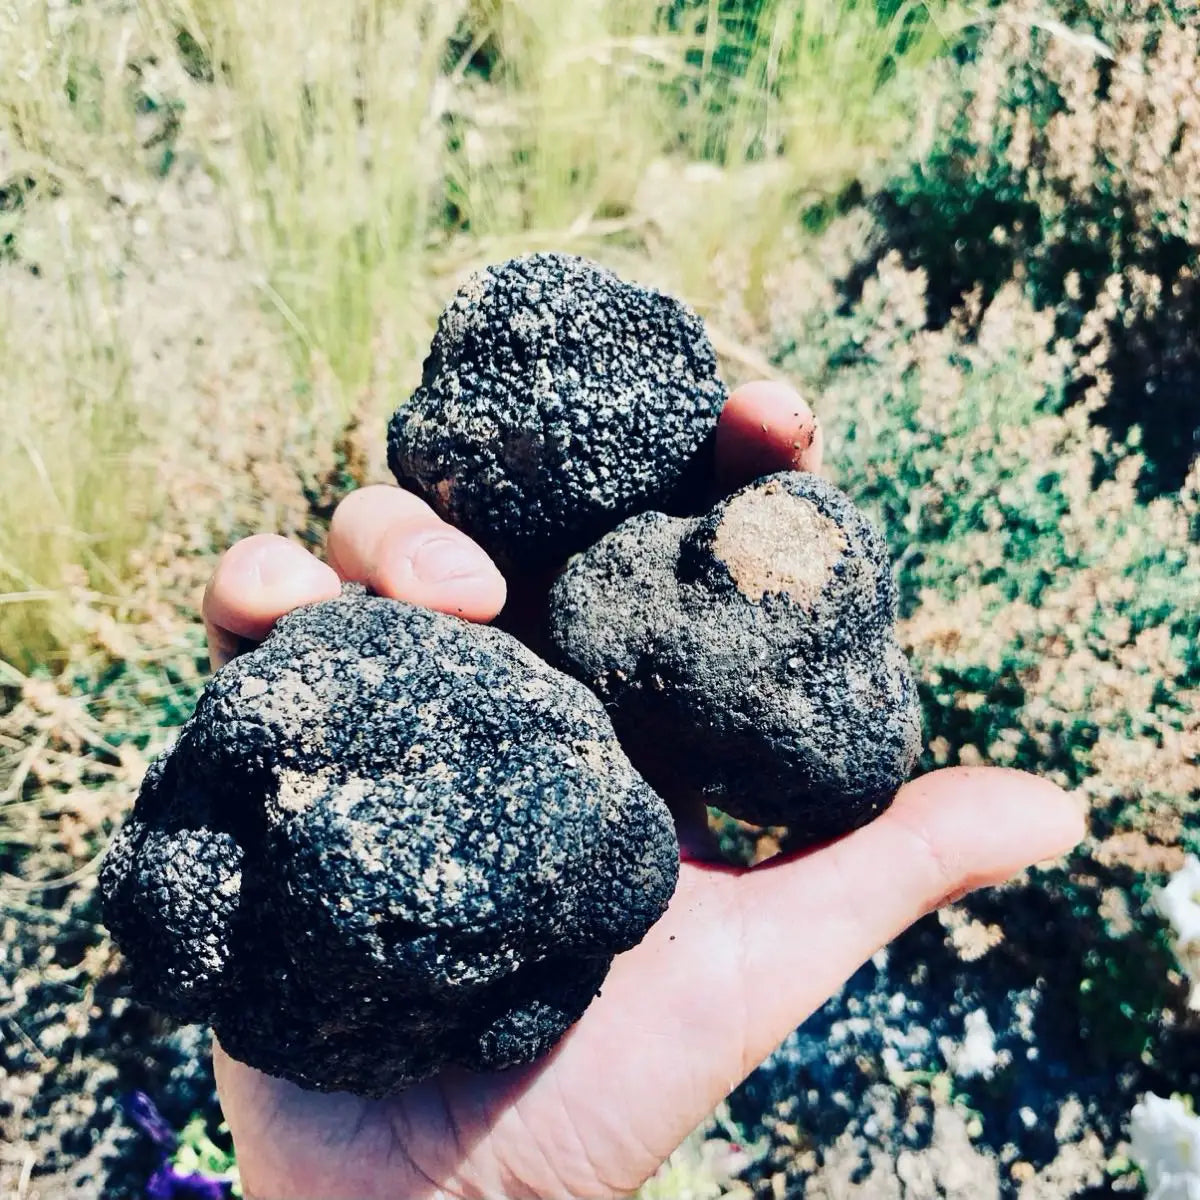 Handful of black truffles